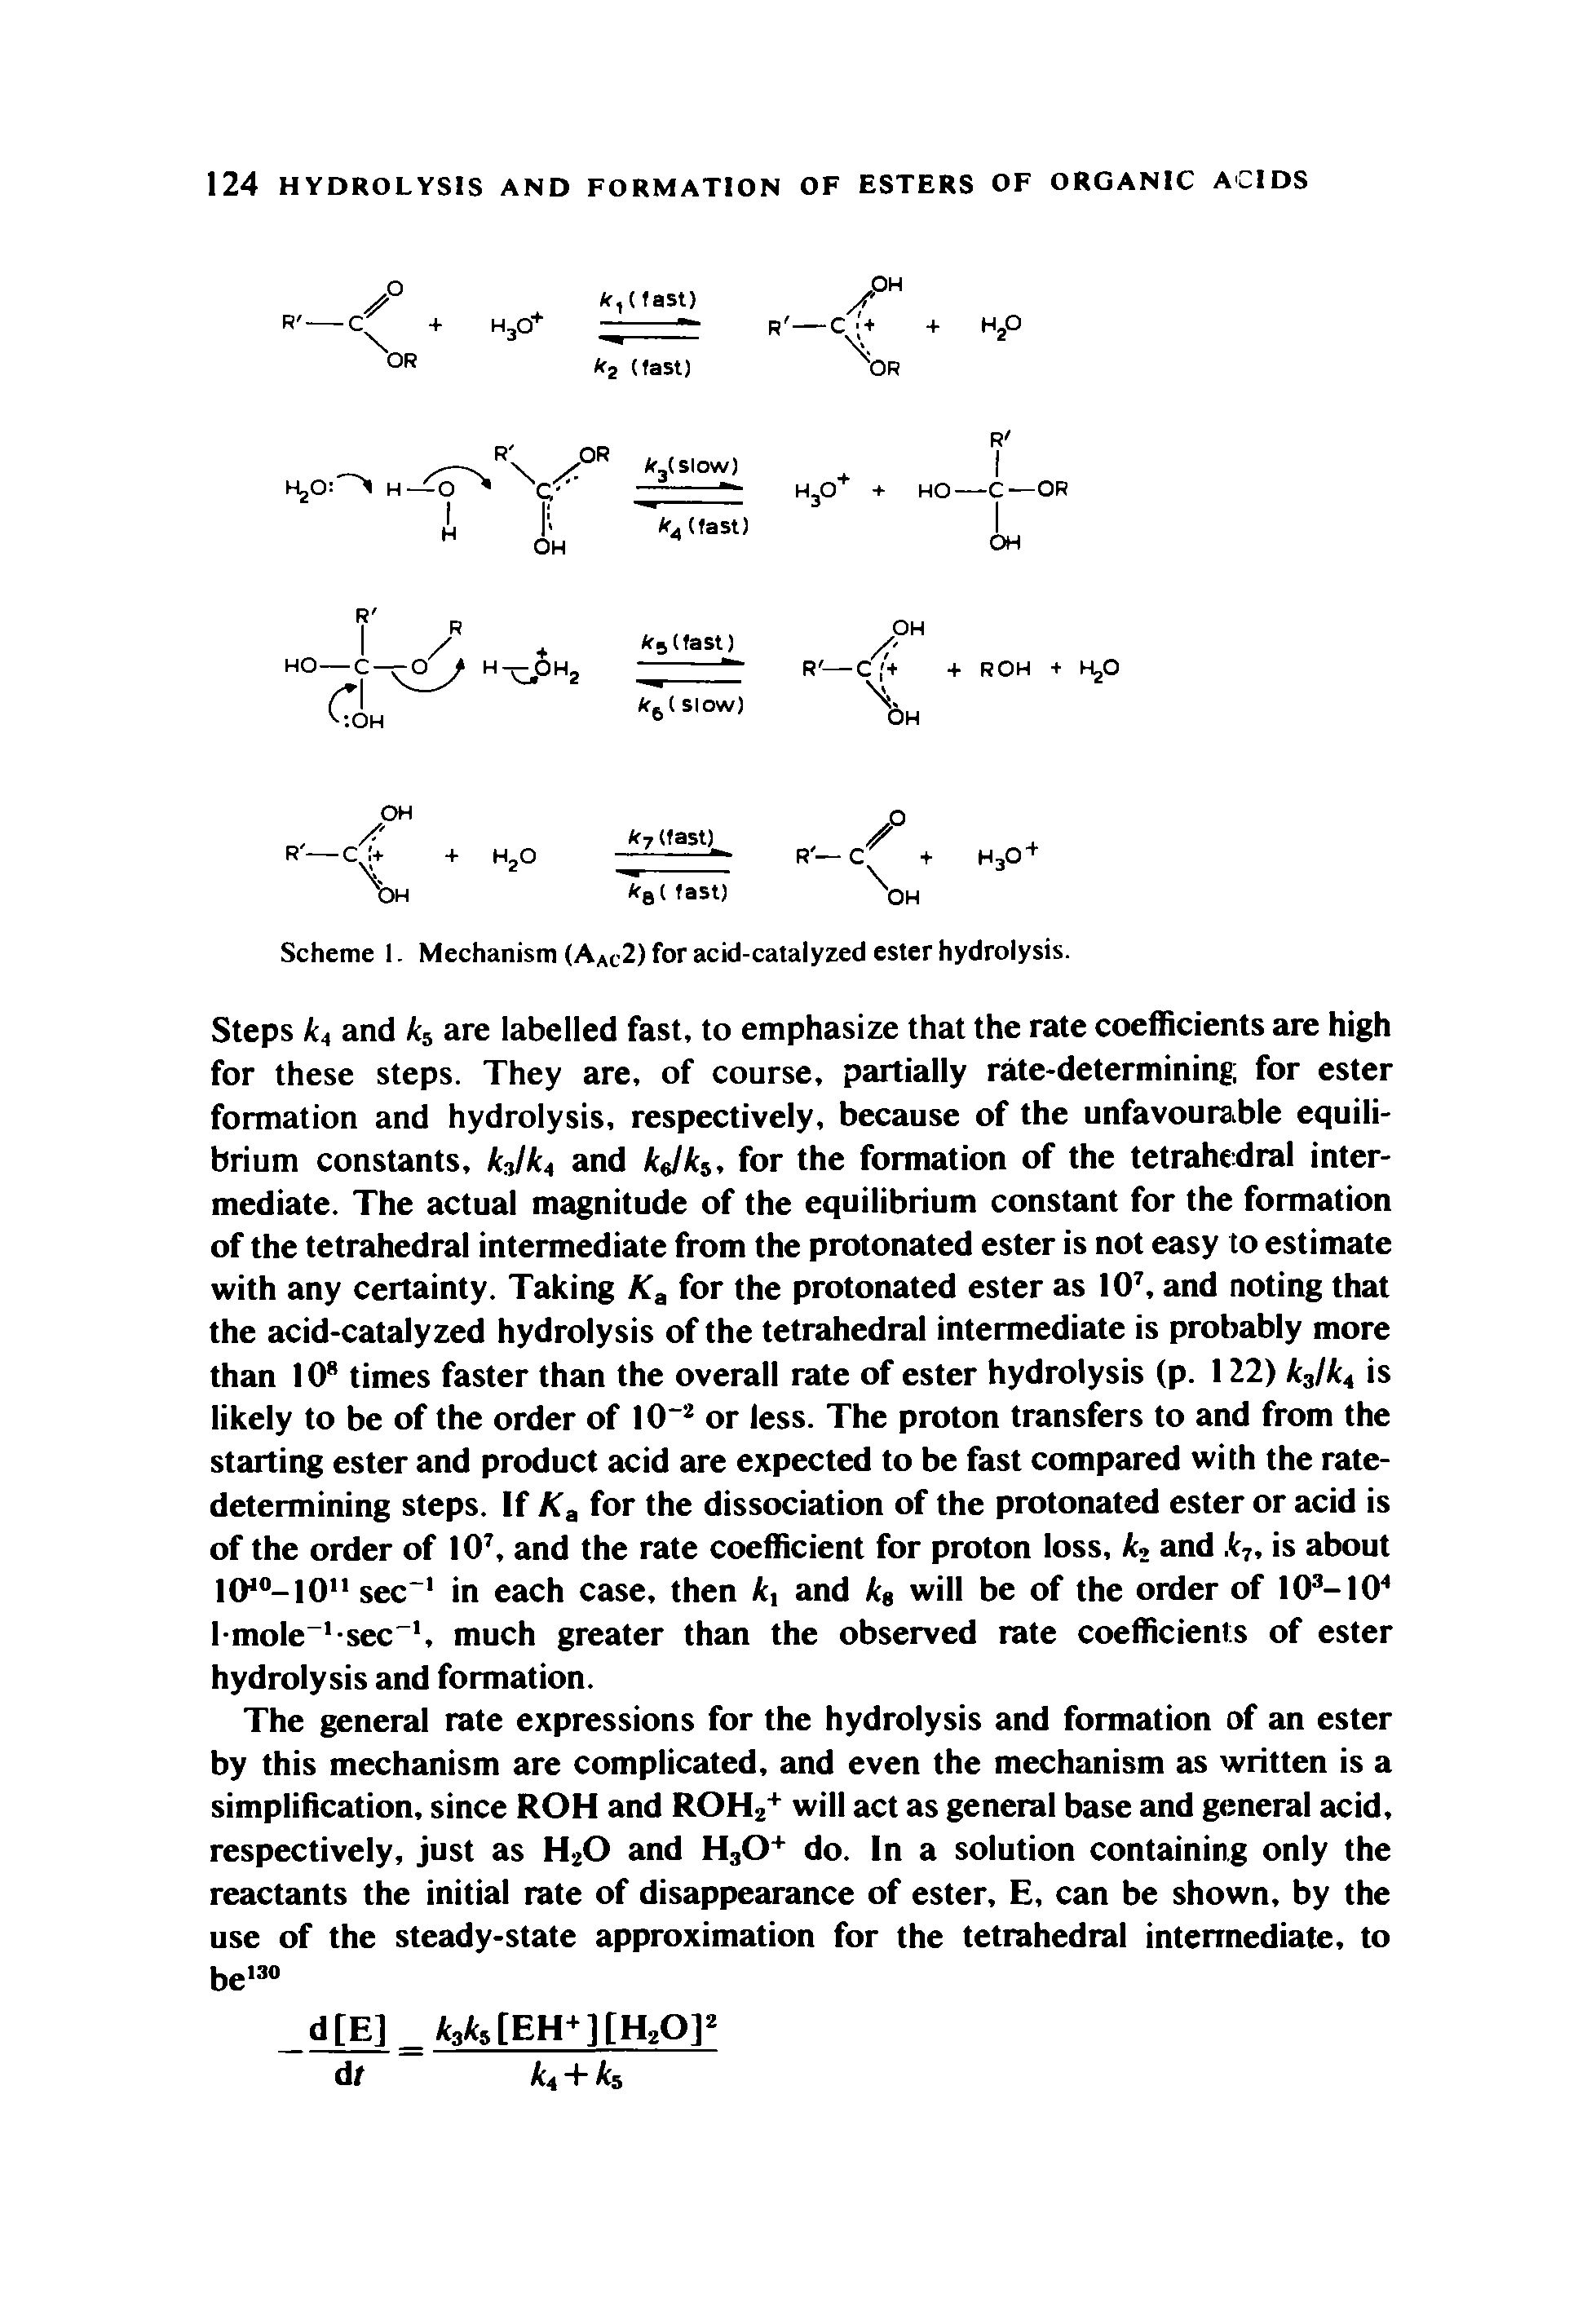 Scheme 1. Mechanism (Aac2) for acid-catalyzed ester hydrolysis.